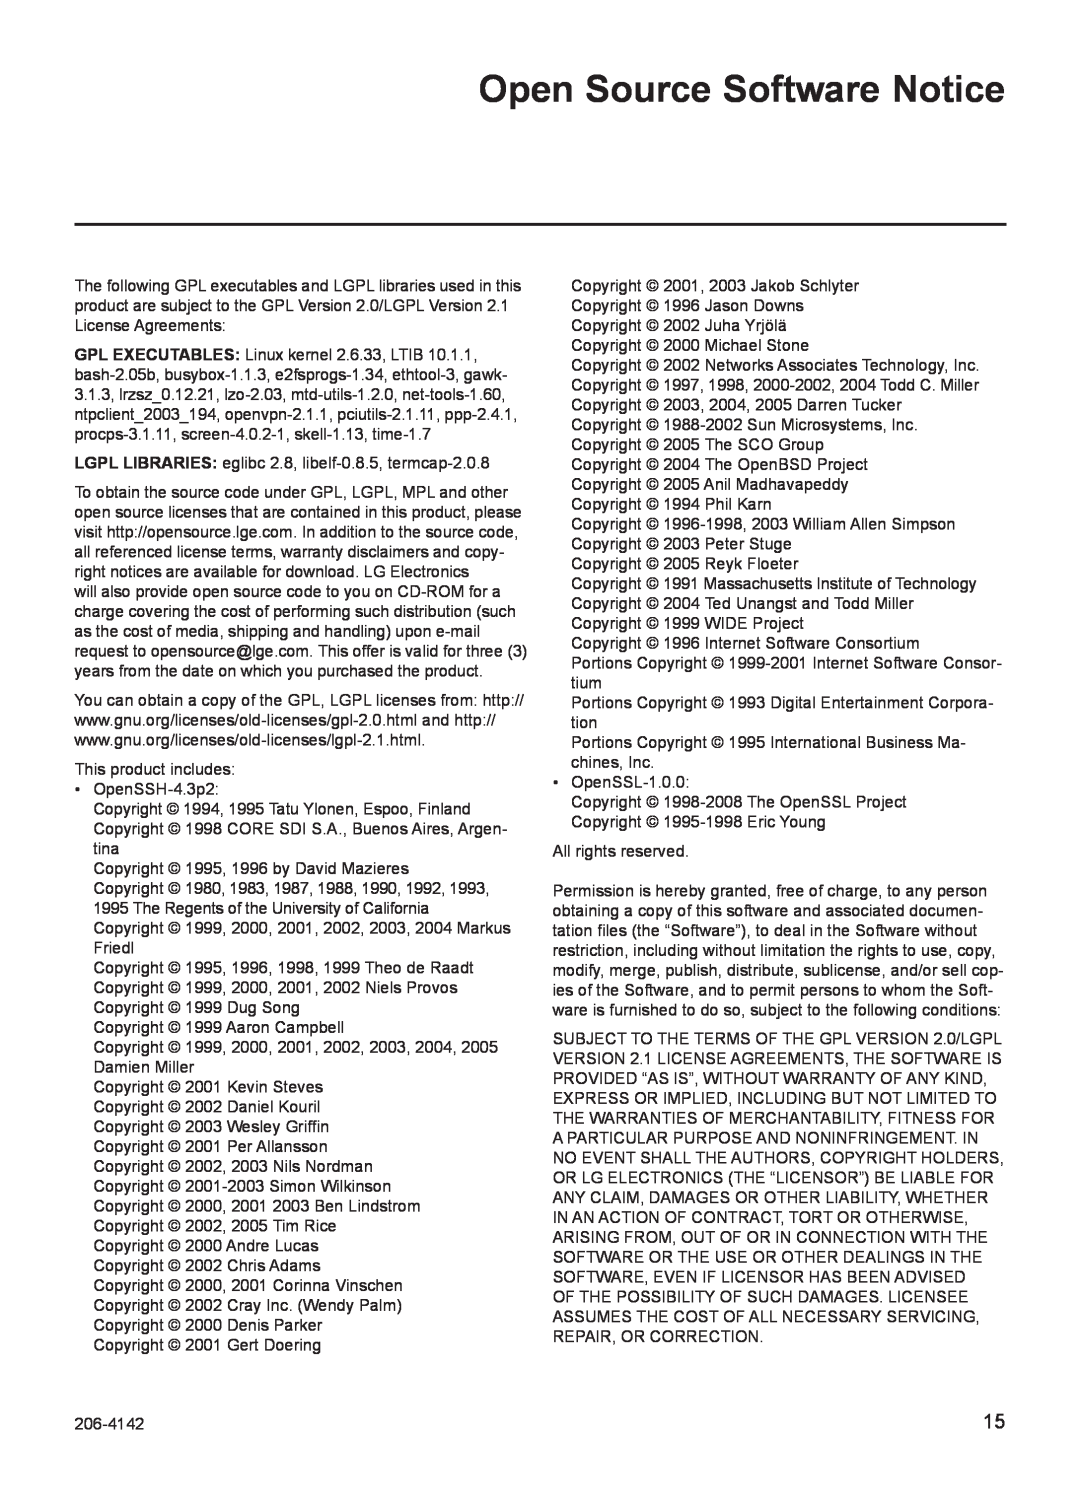 LG Electronics PCS100R setup guide Open Source Software Notice 